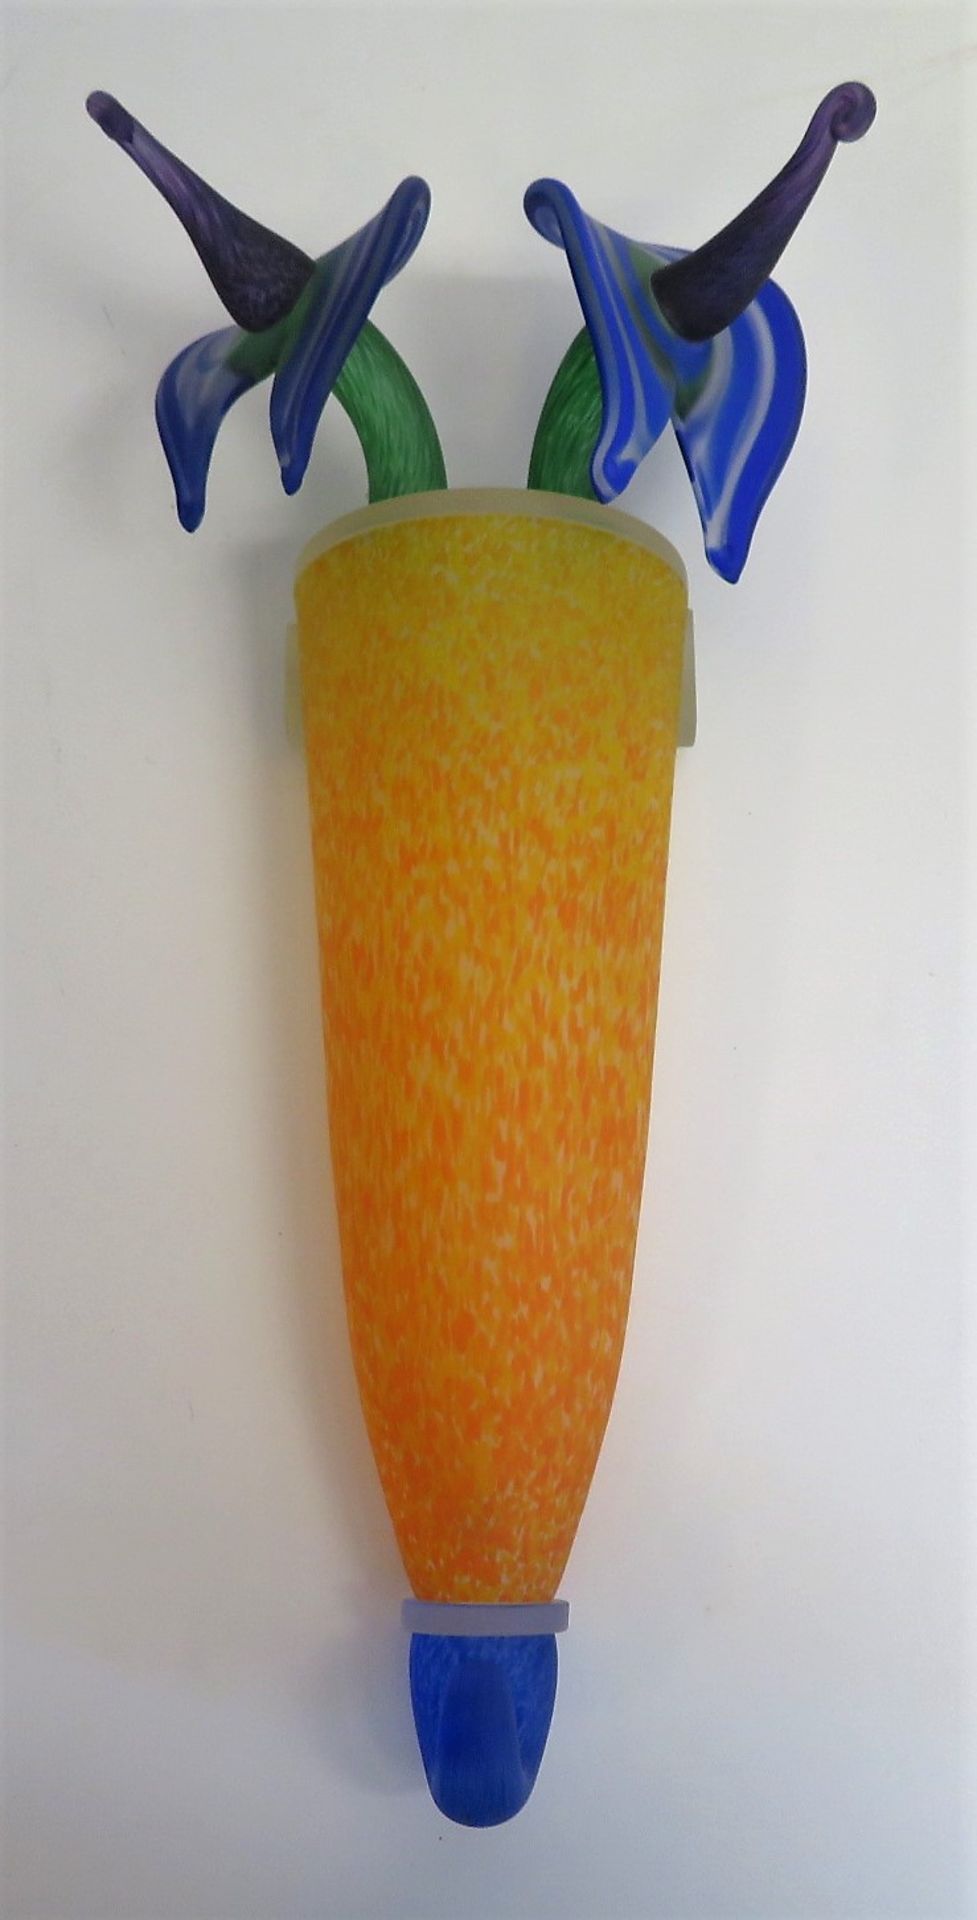 Designer Wandlampe, Borowski Glasstudio Königswinter, farbiges Glas, einflammig, Unikat, sign., Ori